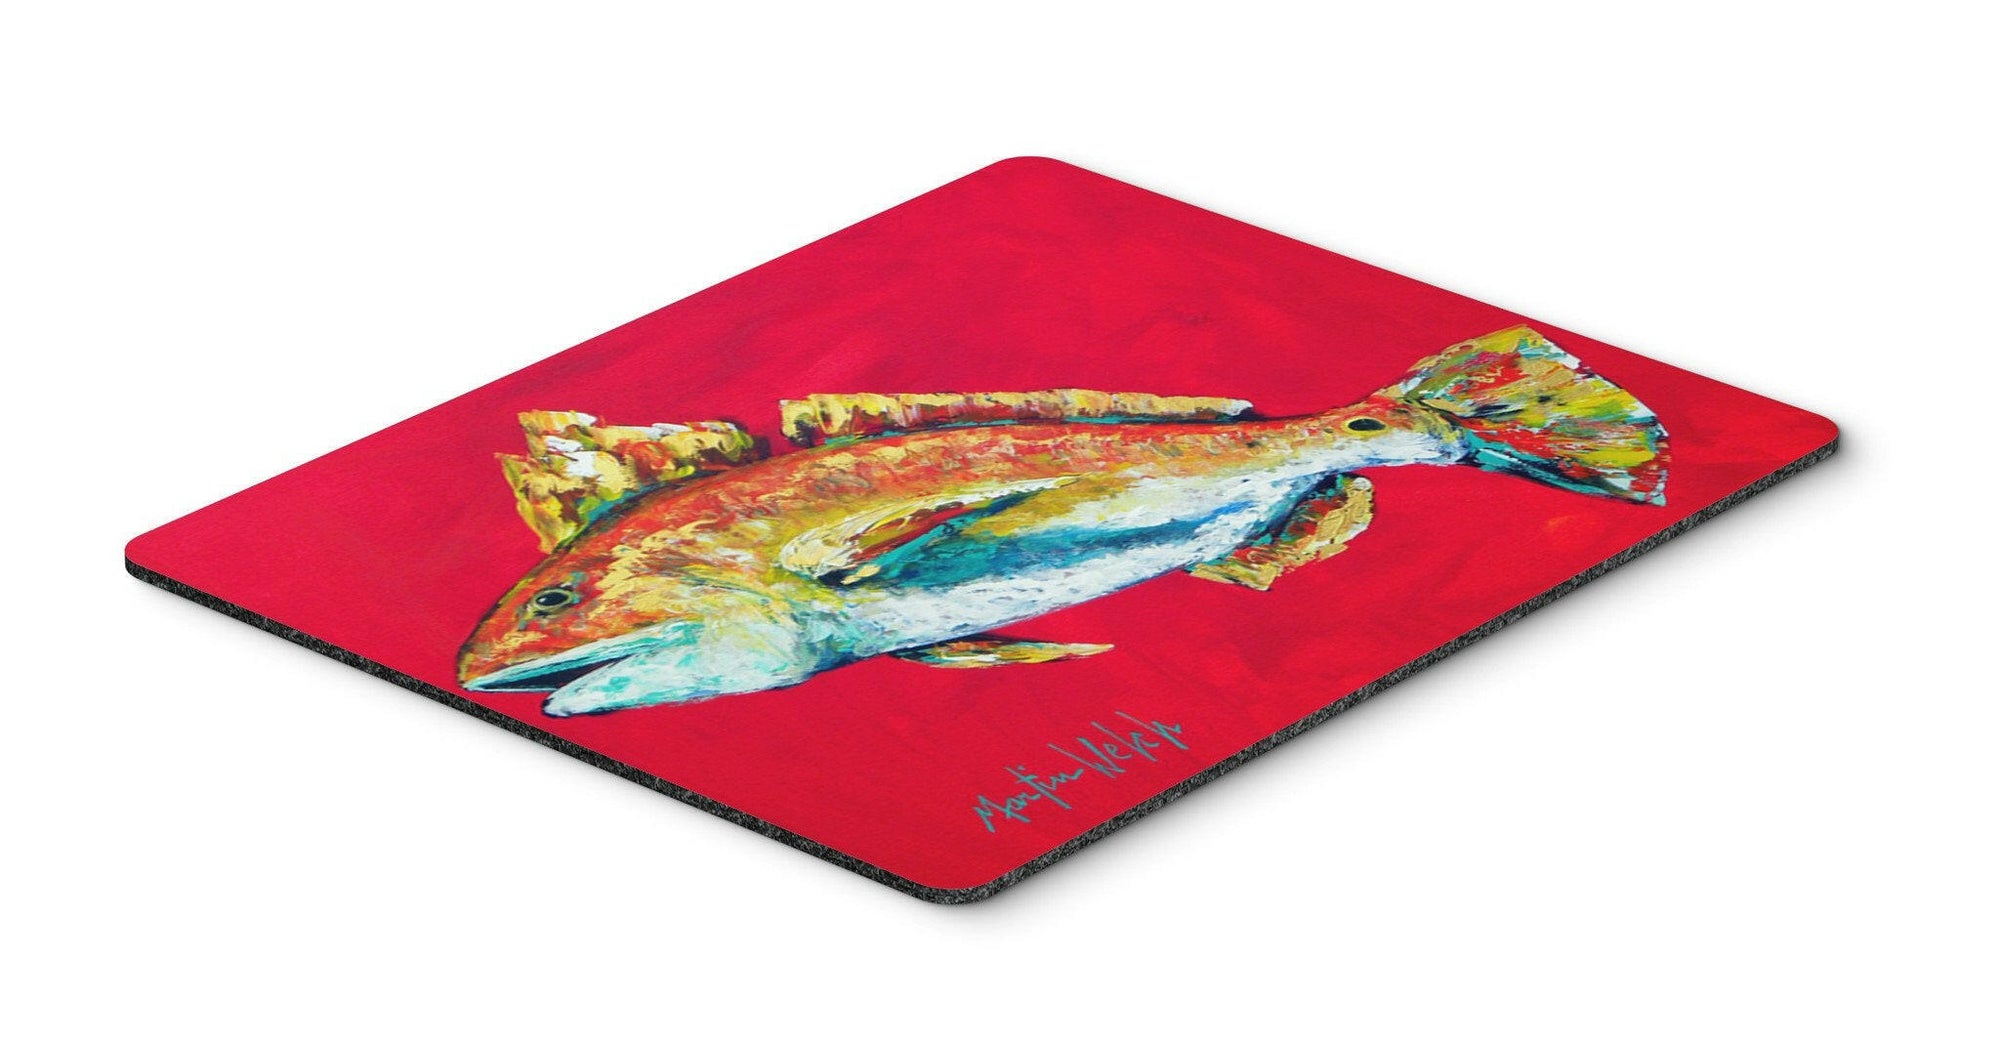 Fish - Red Fish Woo Hoo Mouse Pad, Hot Pad or Trivet by Caroline's Treasures